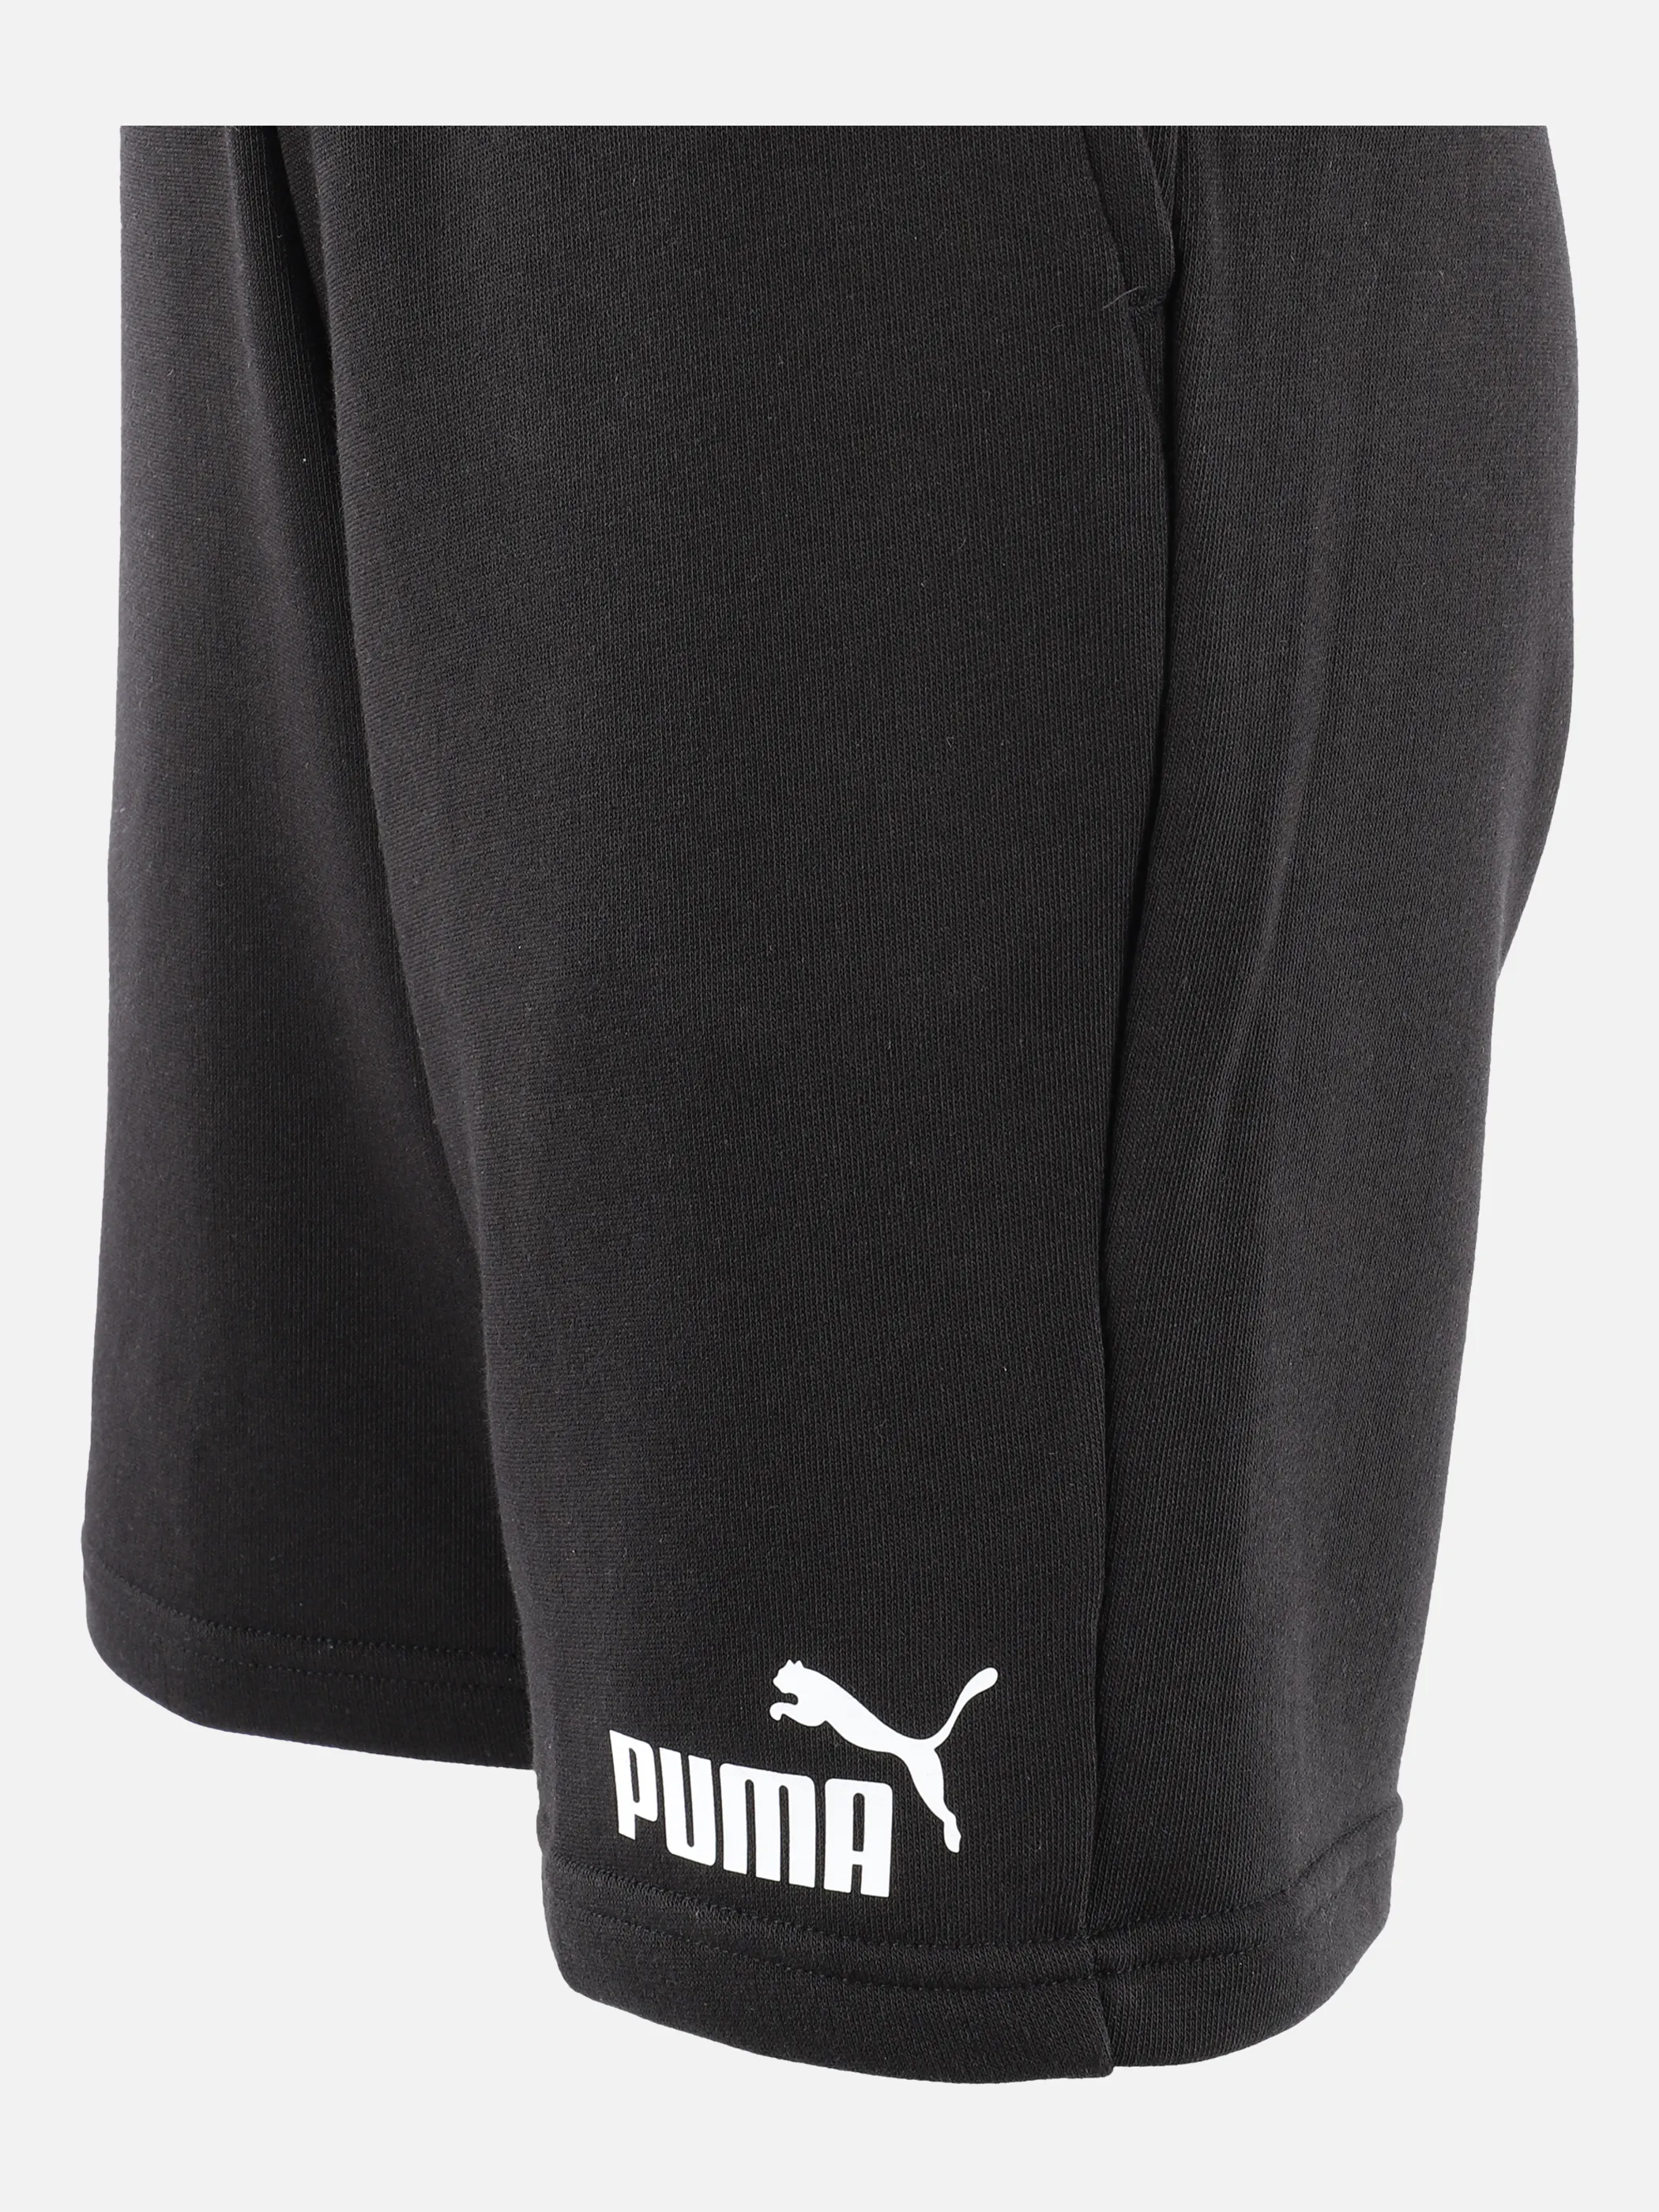 Puma 586972 Kn-Shorts Schwarz 859776 01 3